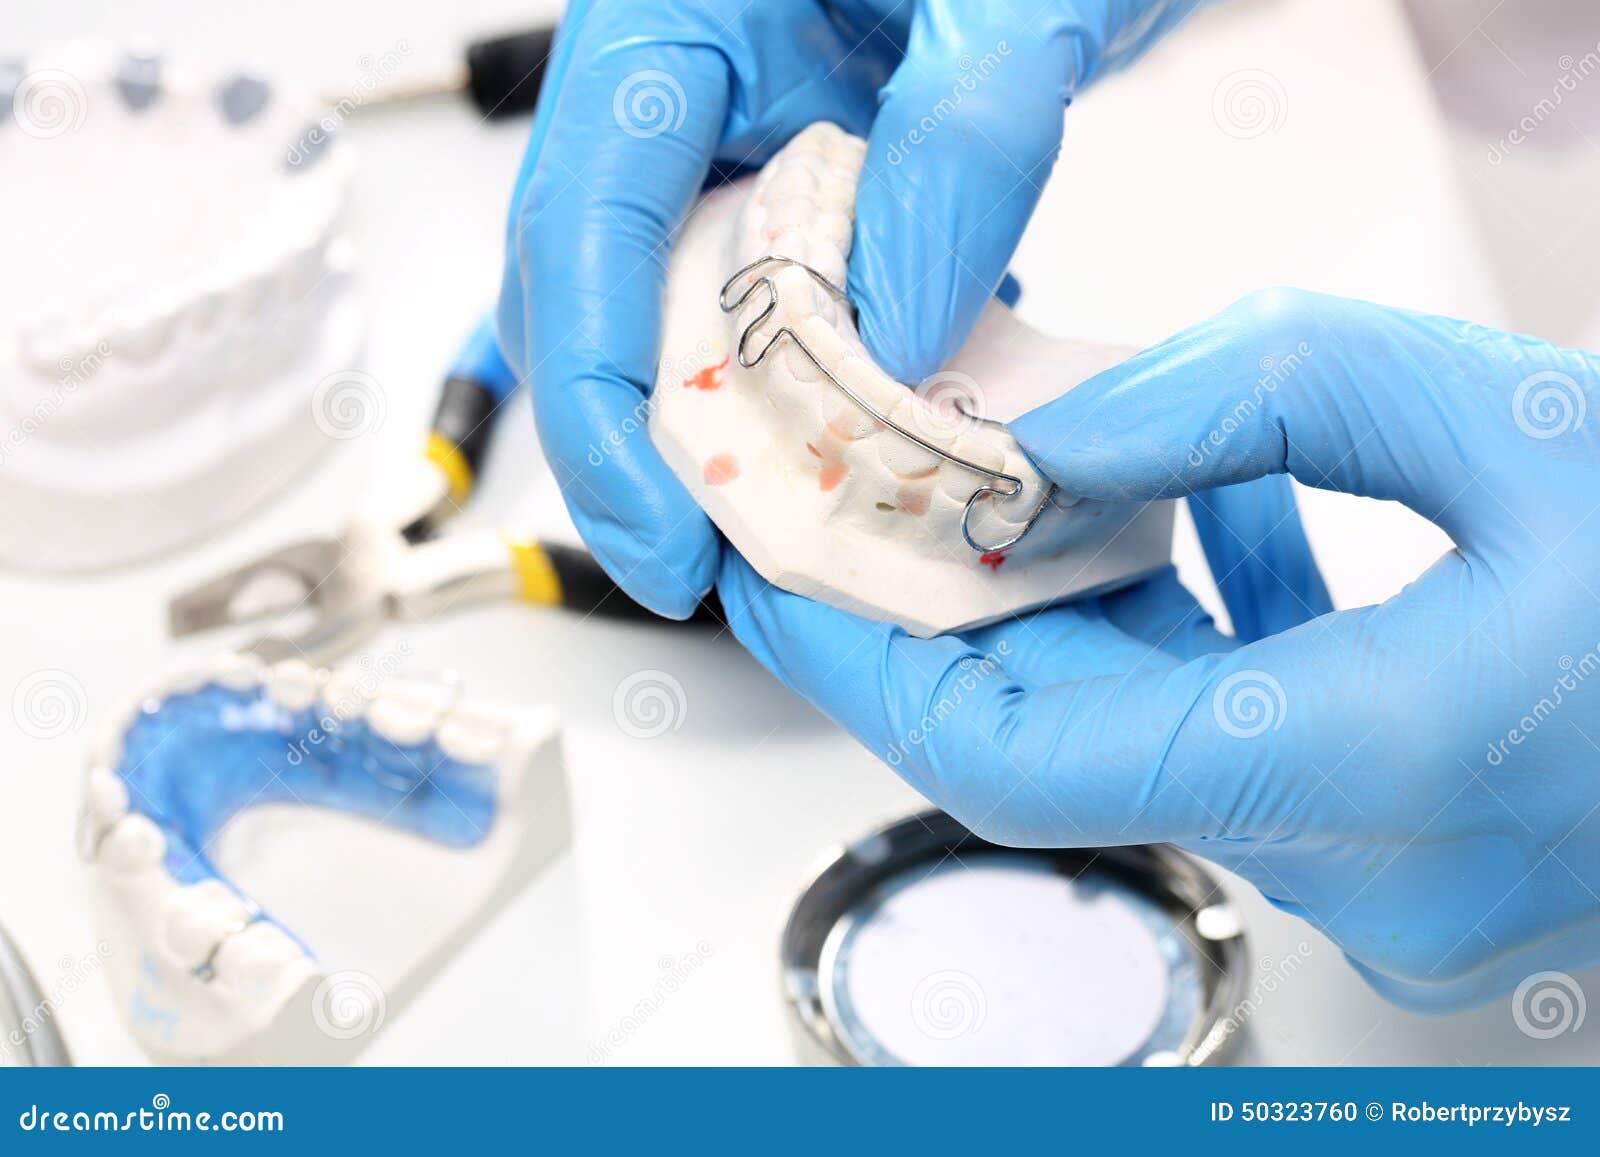 correction of malocclusion, orthodontics